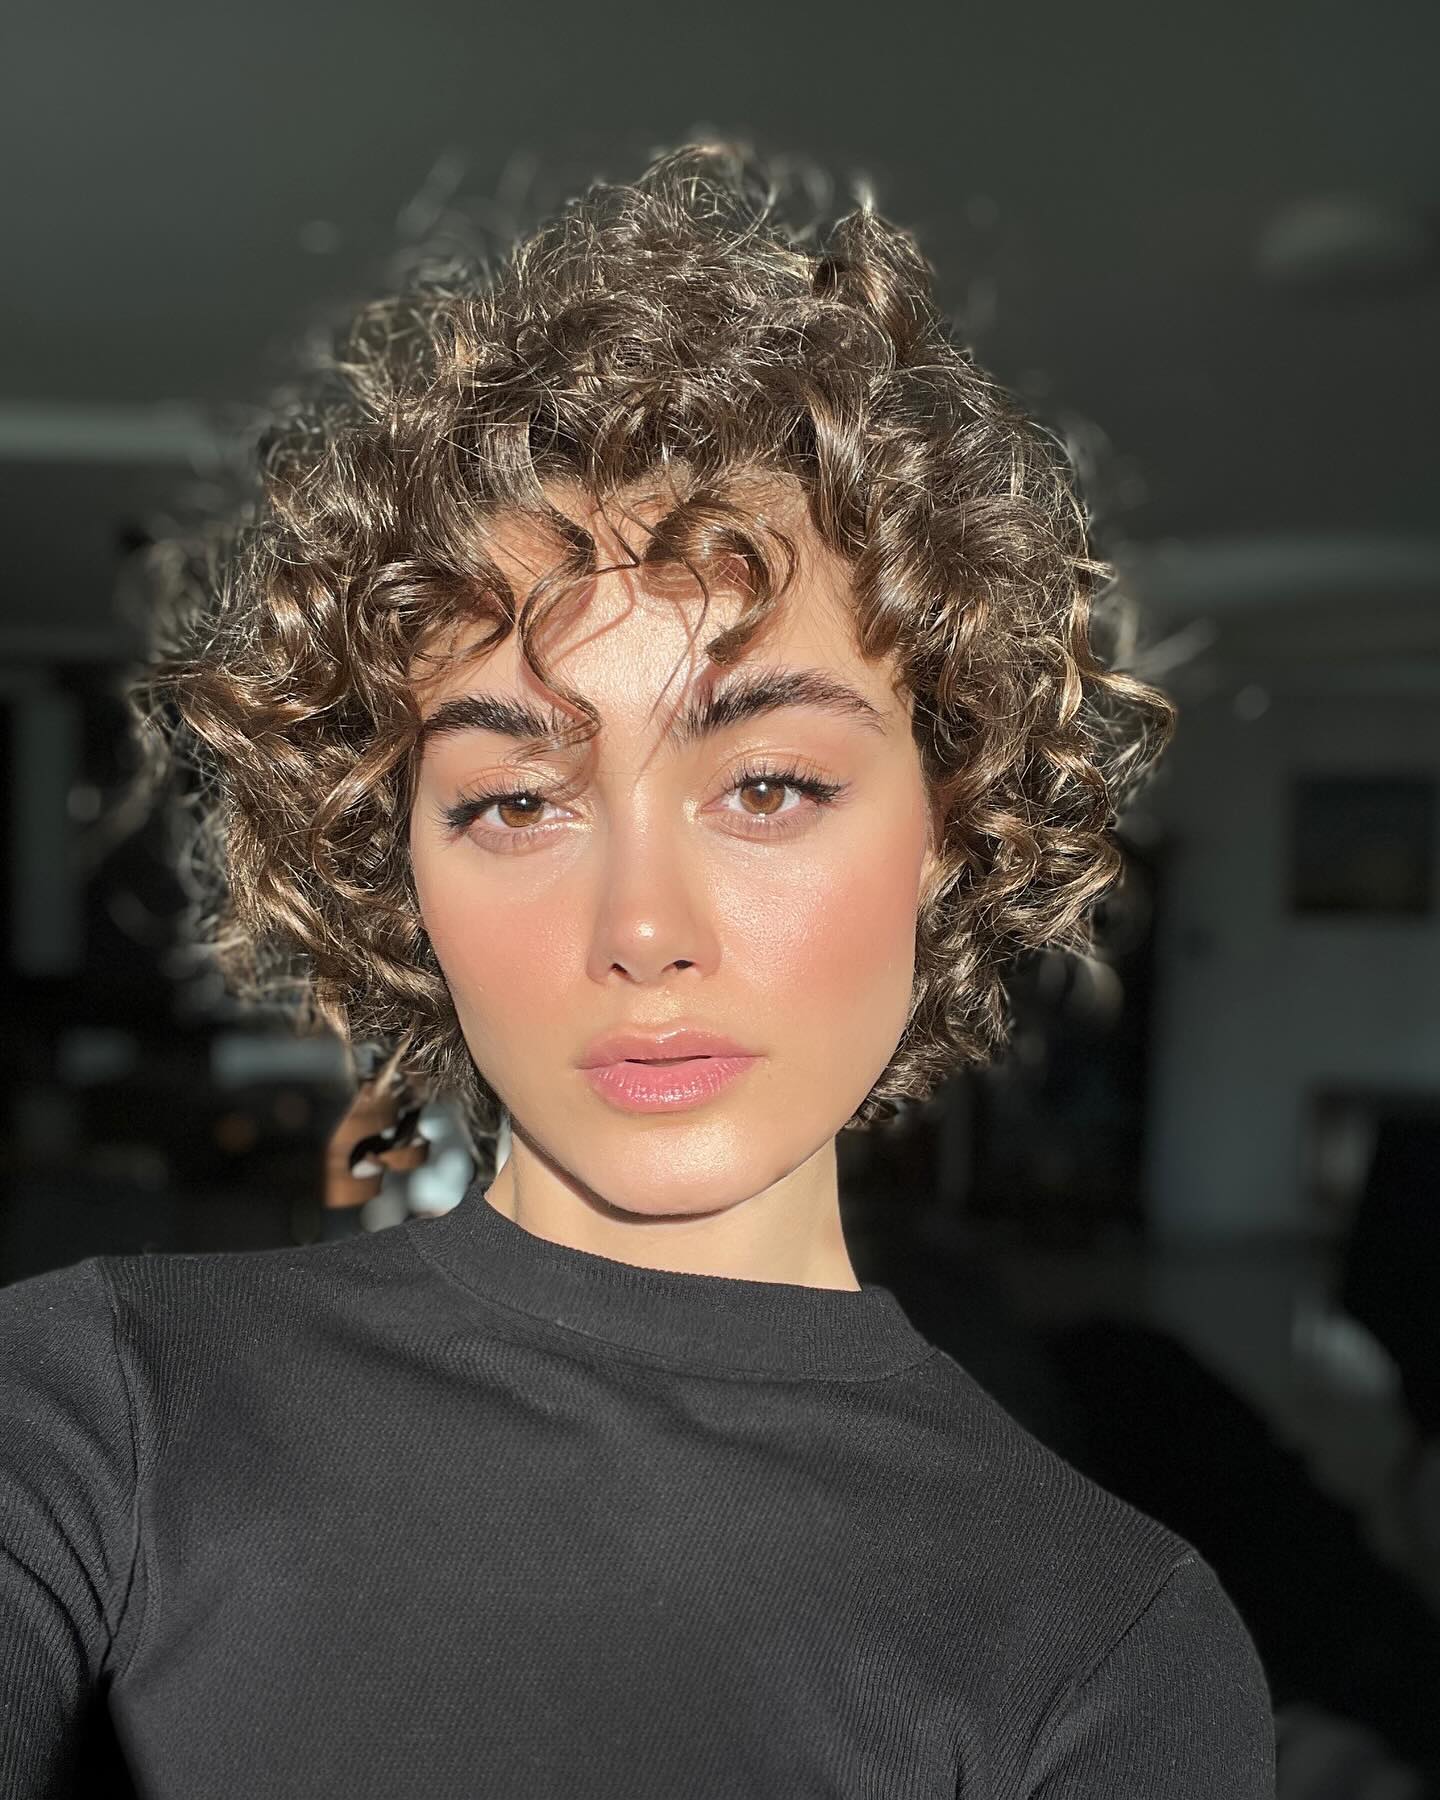 chin-length curls with wispy bangs